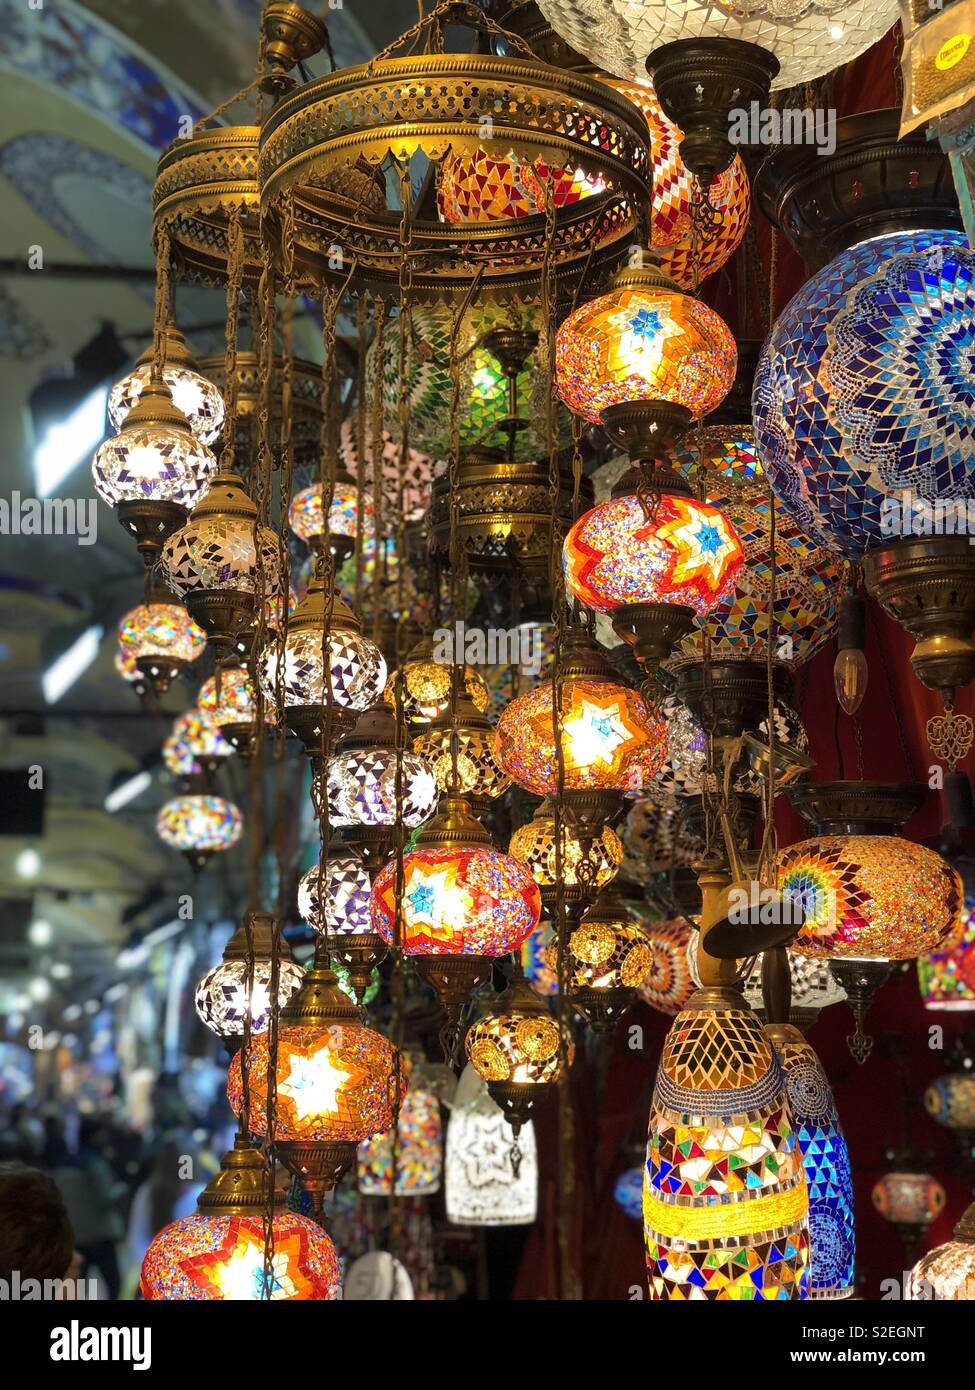 Ottoman mosaic lamps at the Grand Bazaar market, Istanbul, Turkey Stock  Photo - Alamy